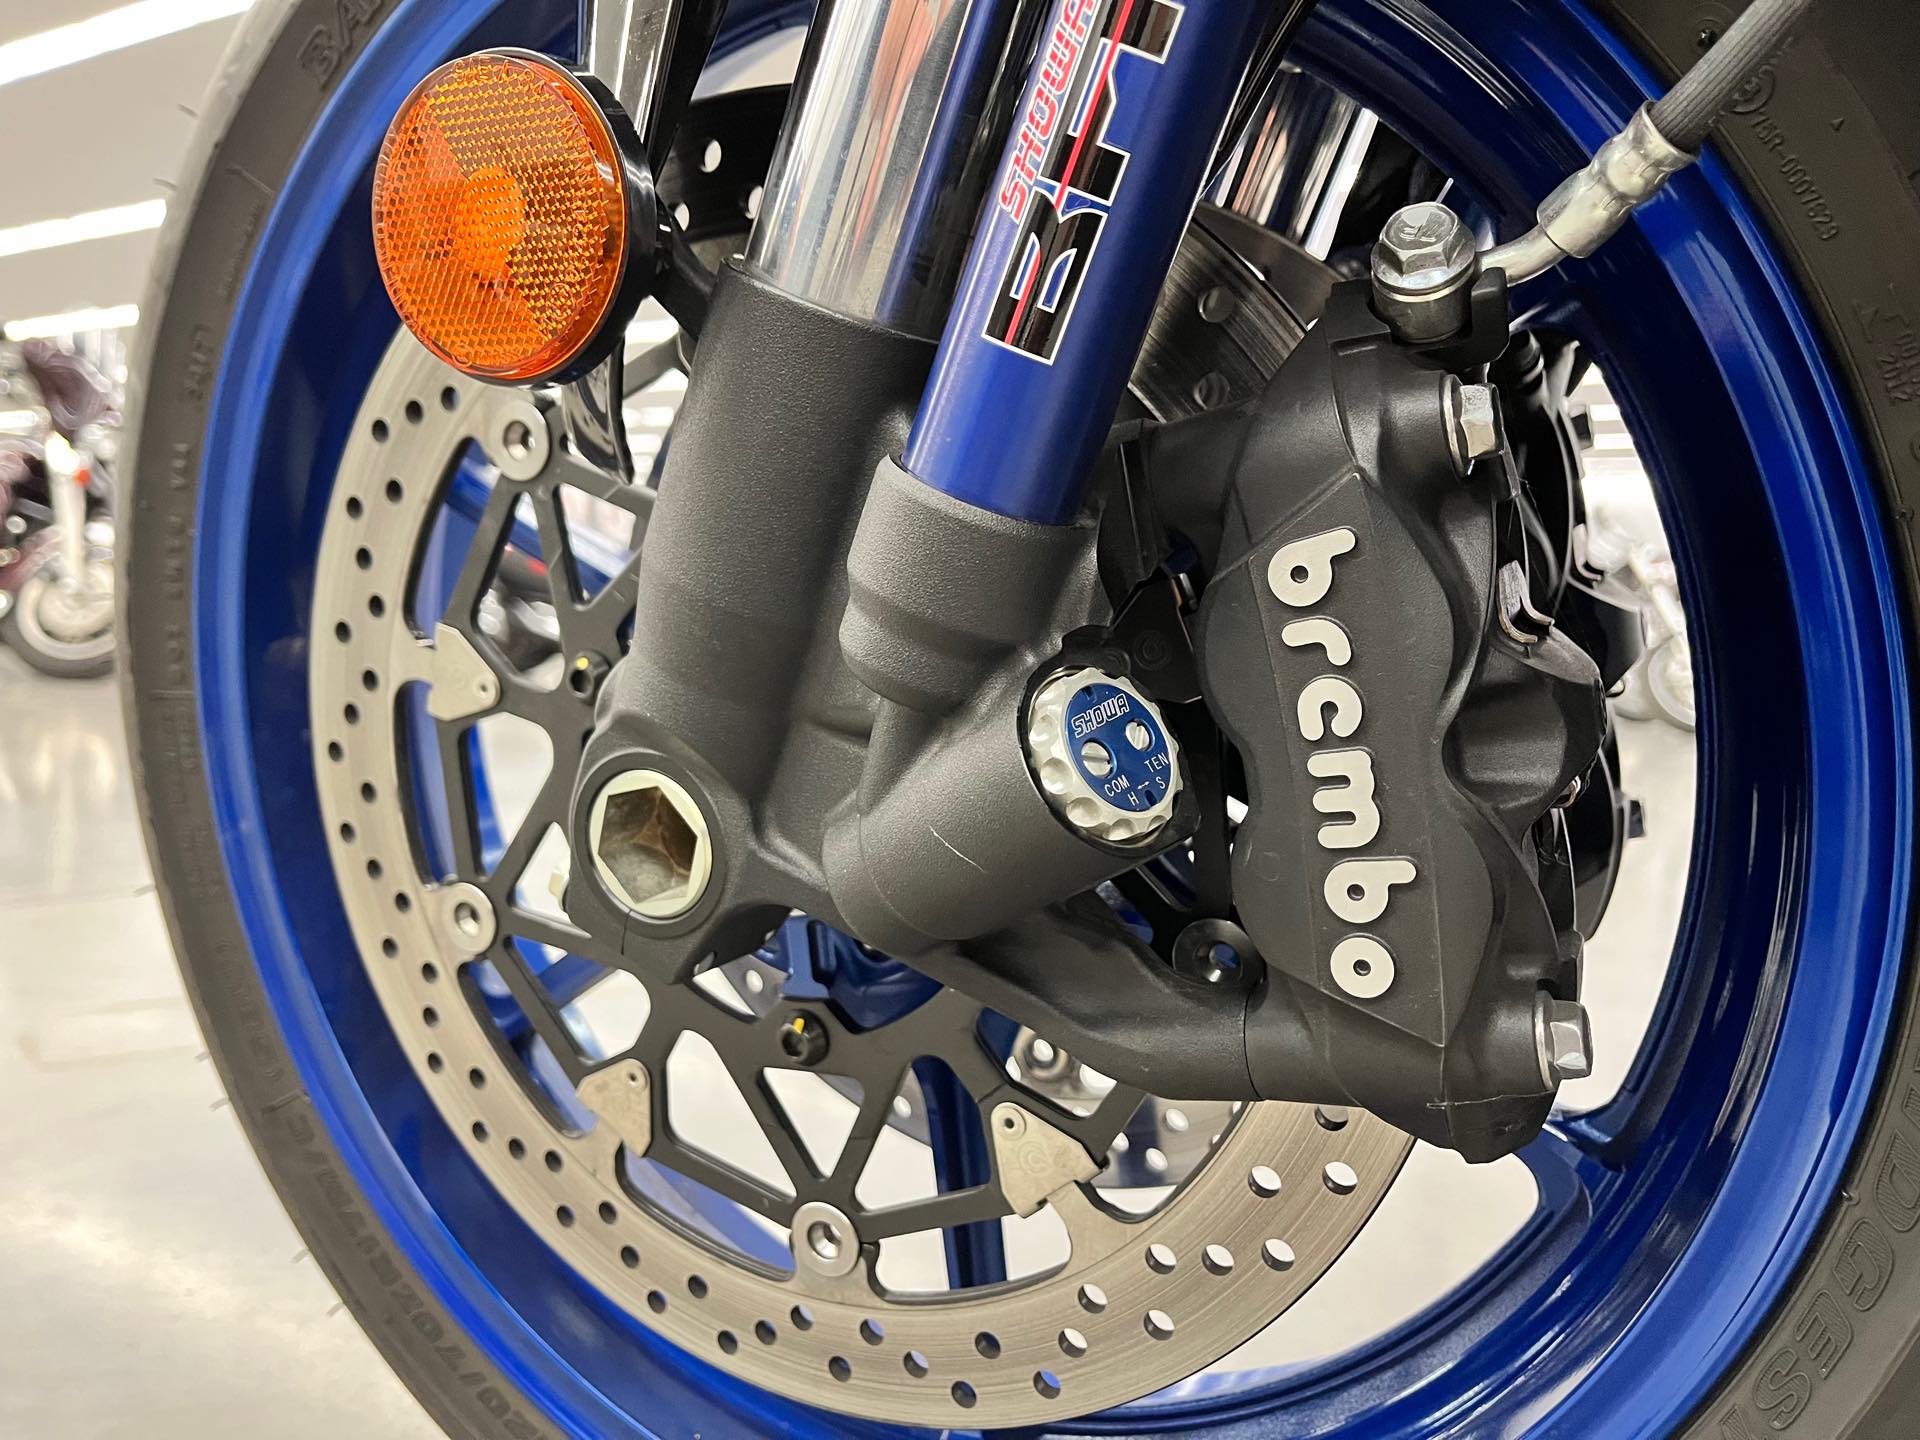 2018 Suzuki GSX-R 1000R at Aces Motorcycles - Denver